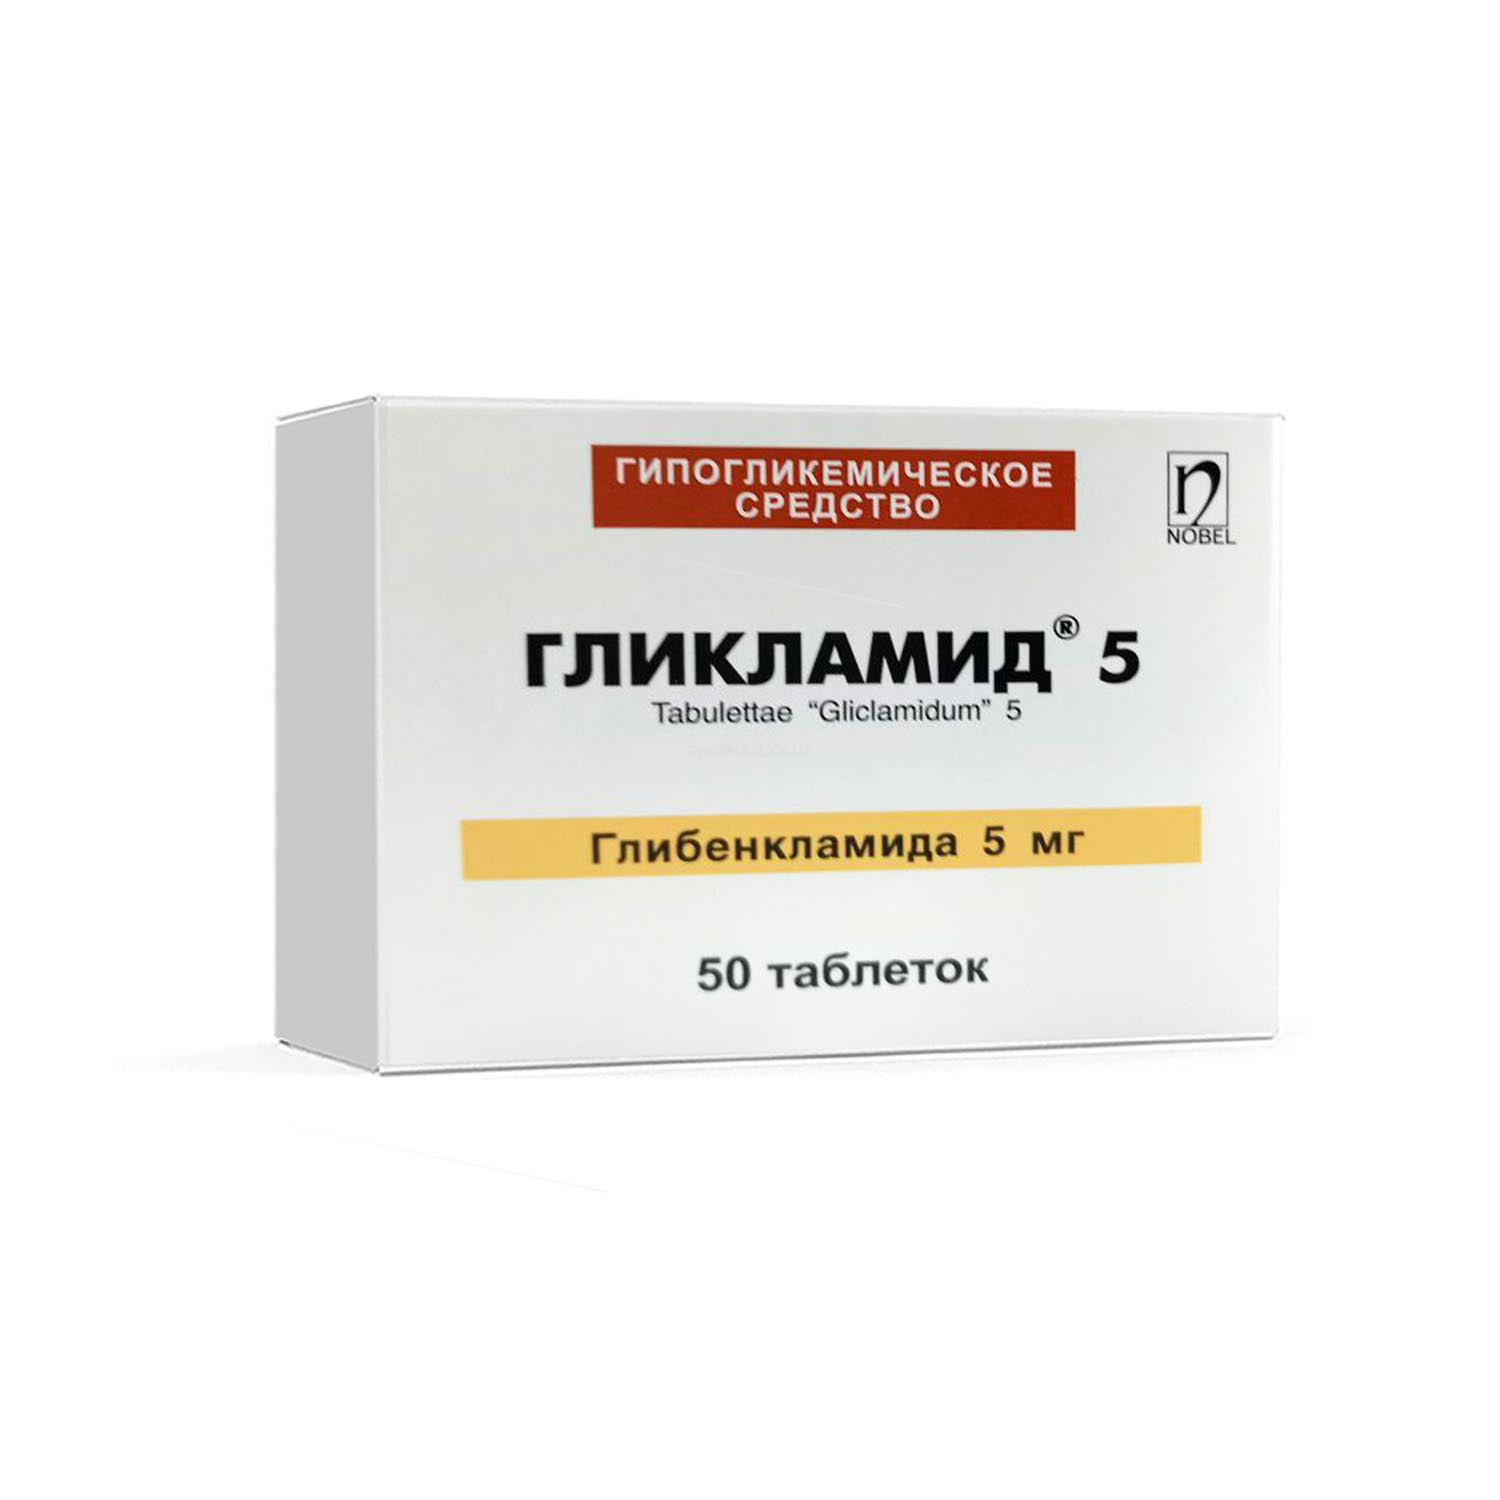 Гликламид 5, таблетки № 50